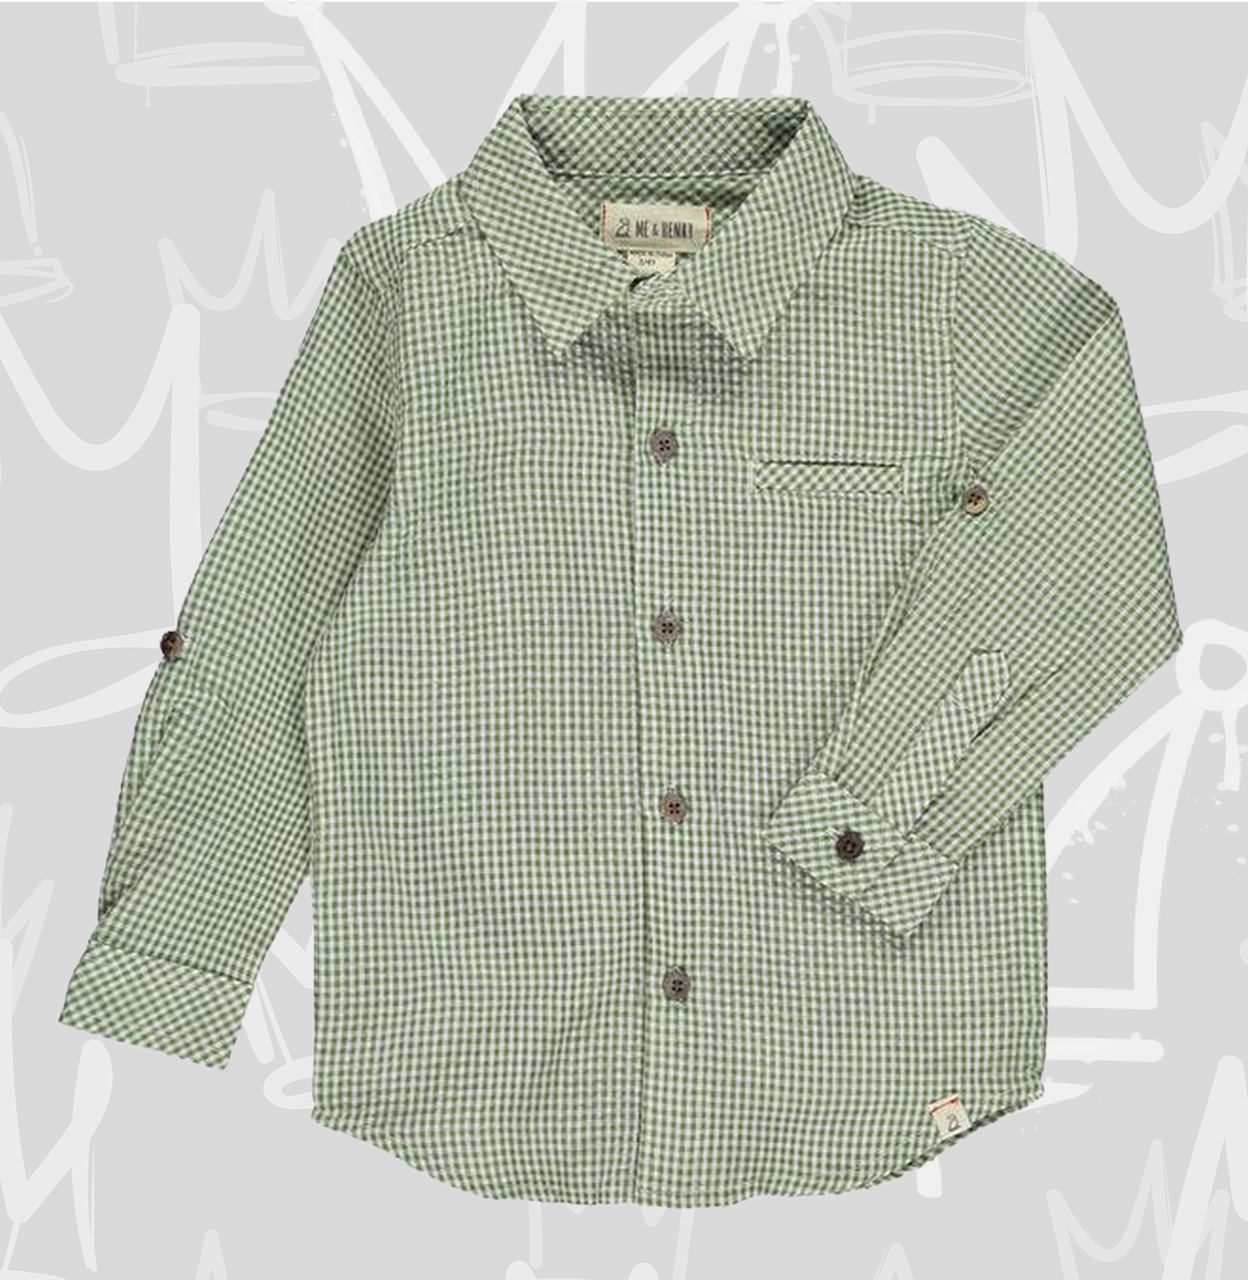 Green/White grid woven shirt